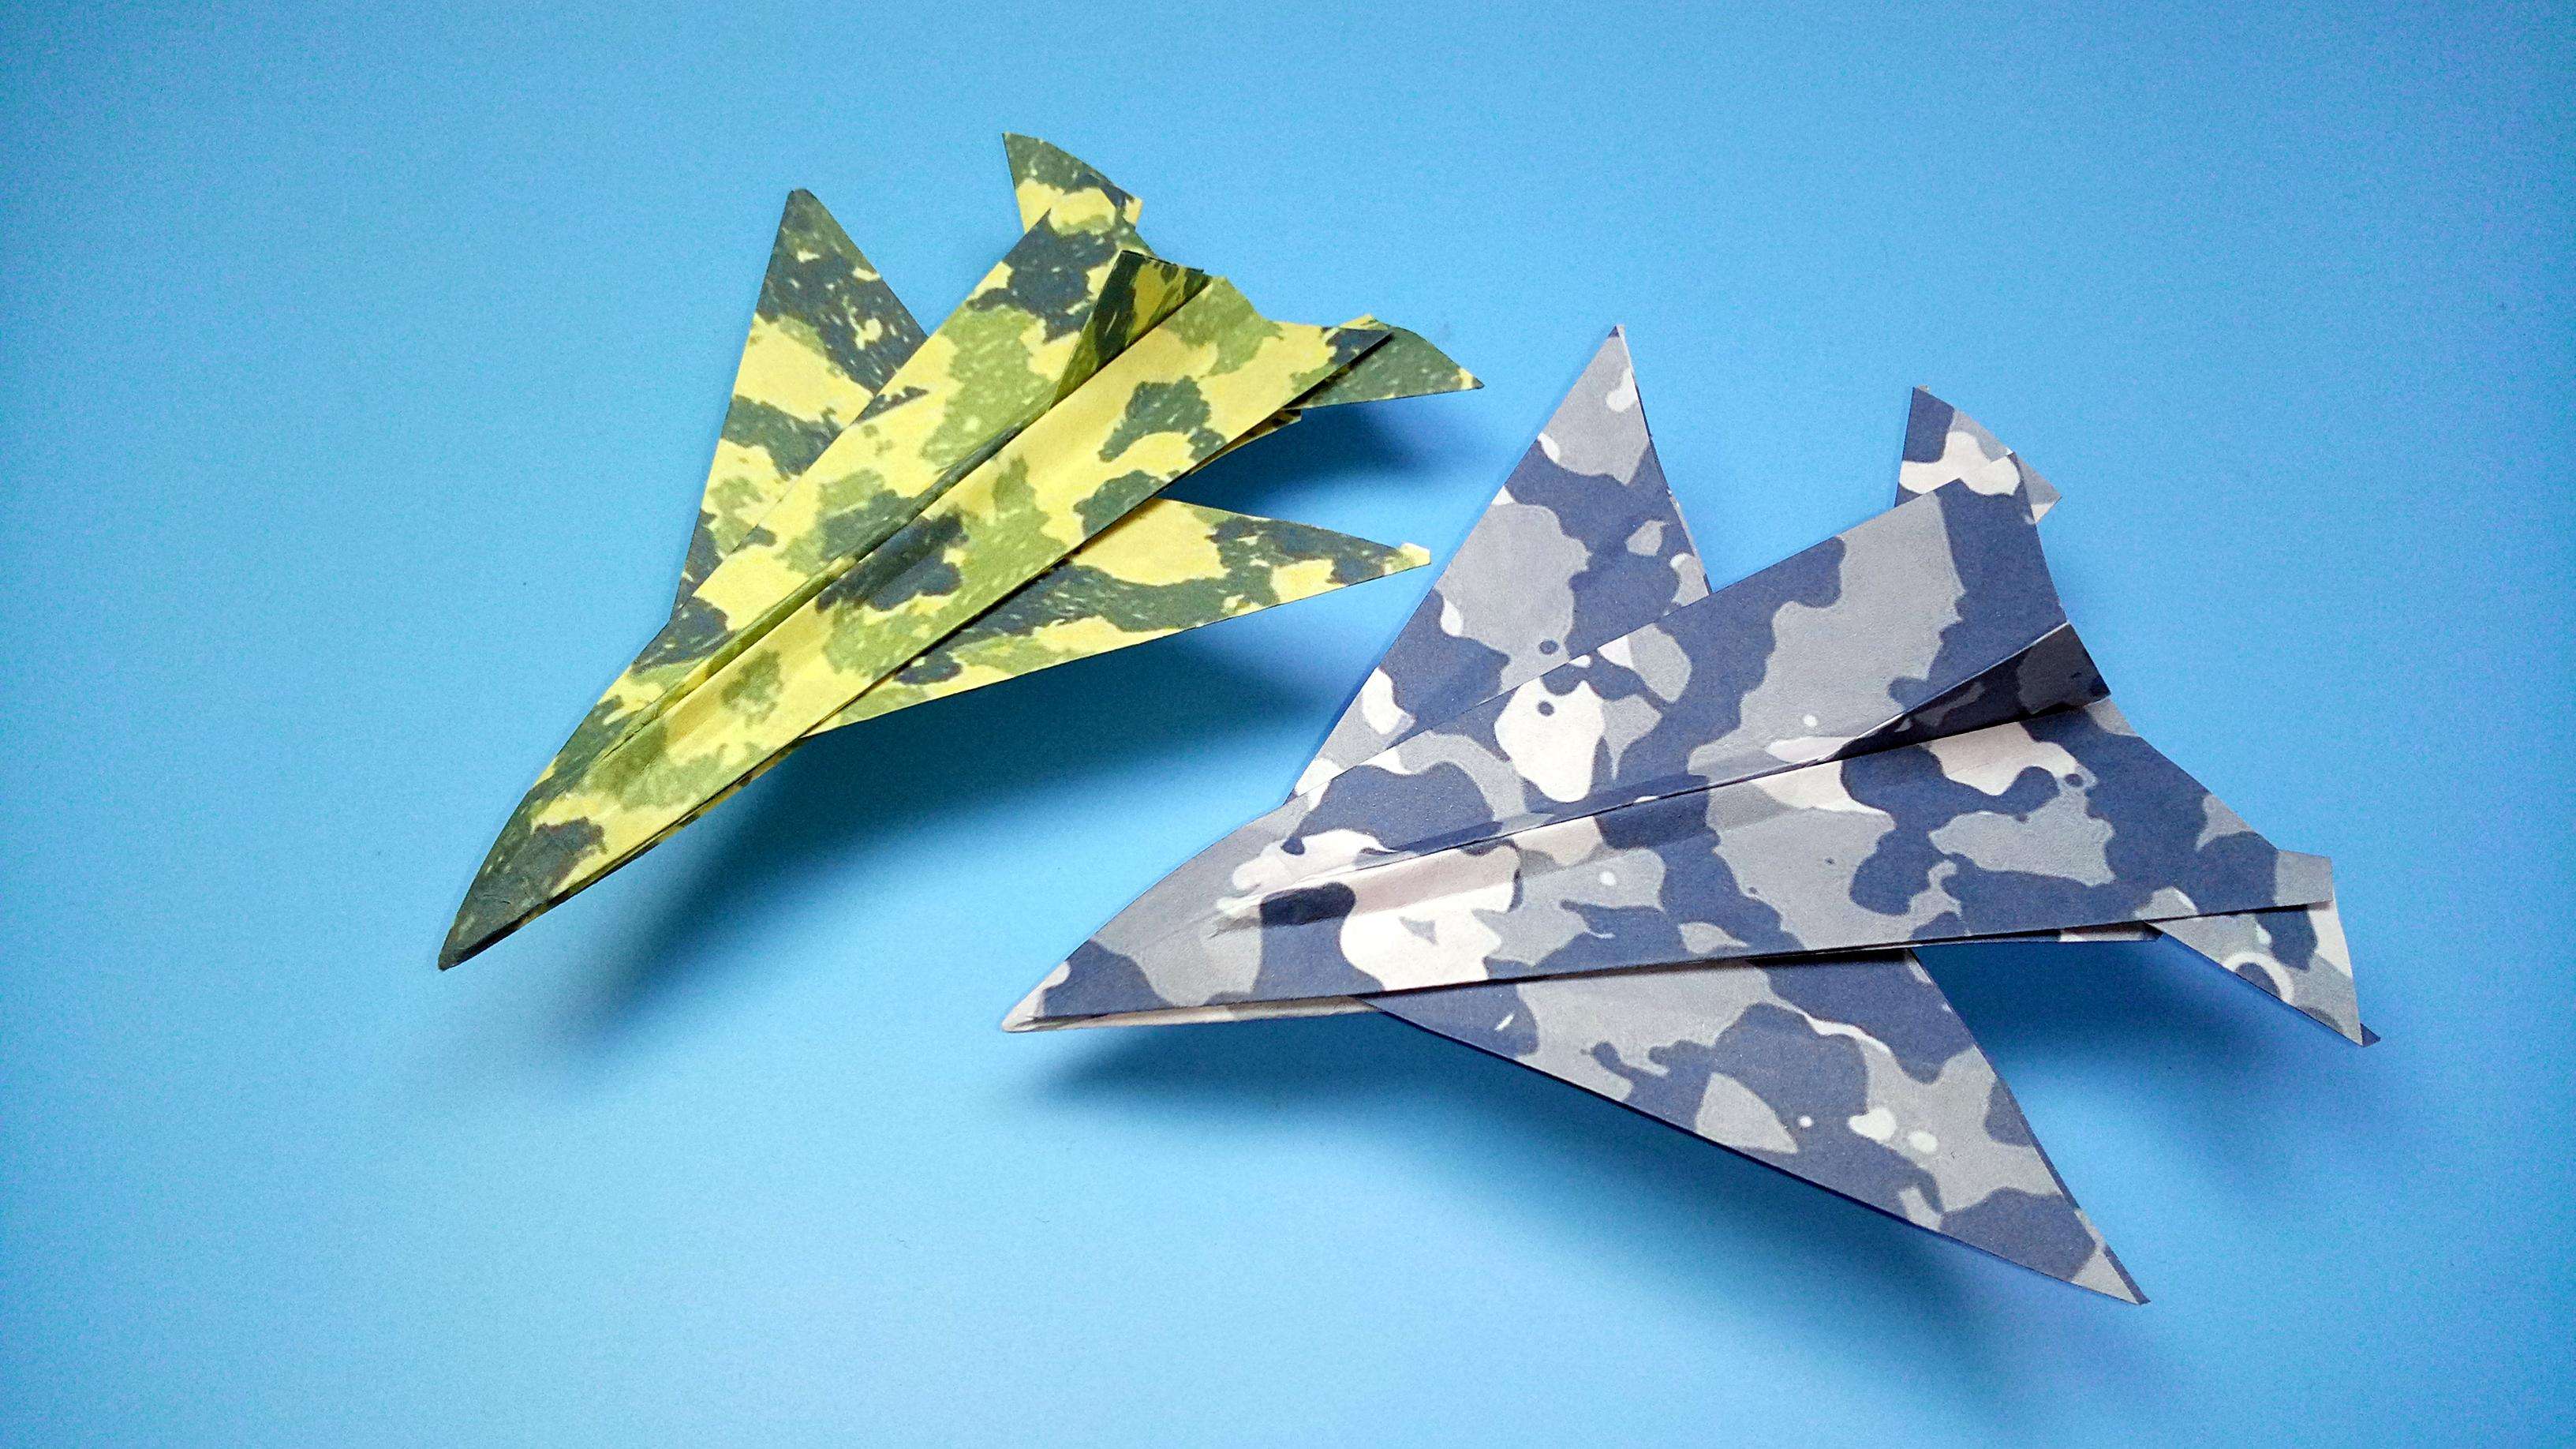 【折纸-教程】用正方形纸折个纸飞机，能飞，包会√_哔哩哔哩 (゜-゜)つロ 干杯~-bilibili